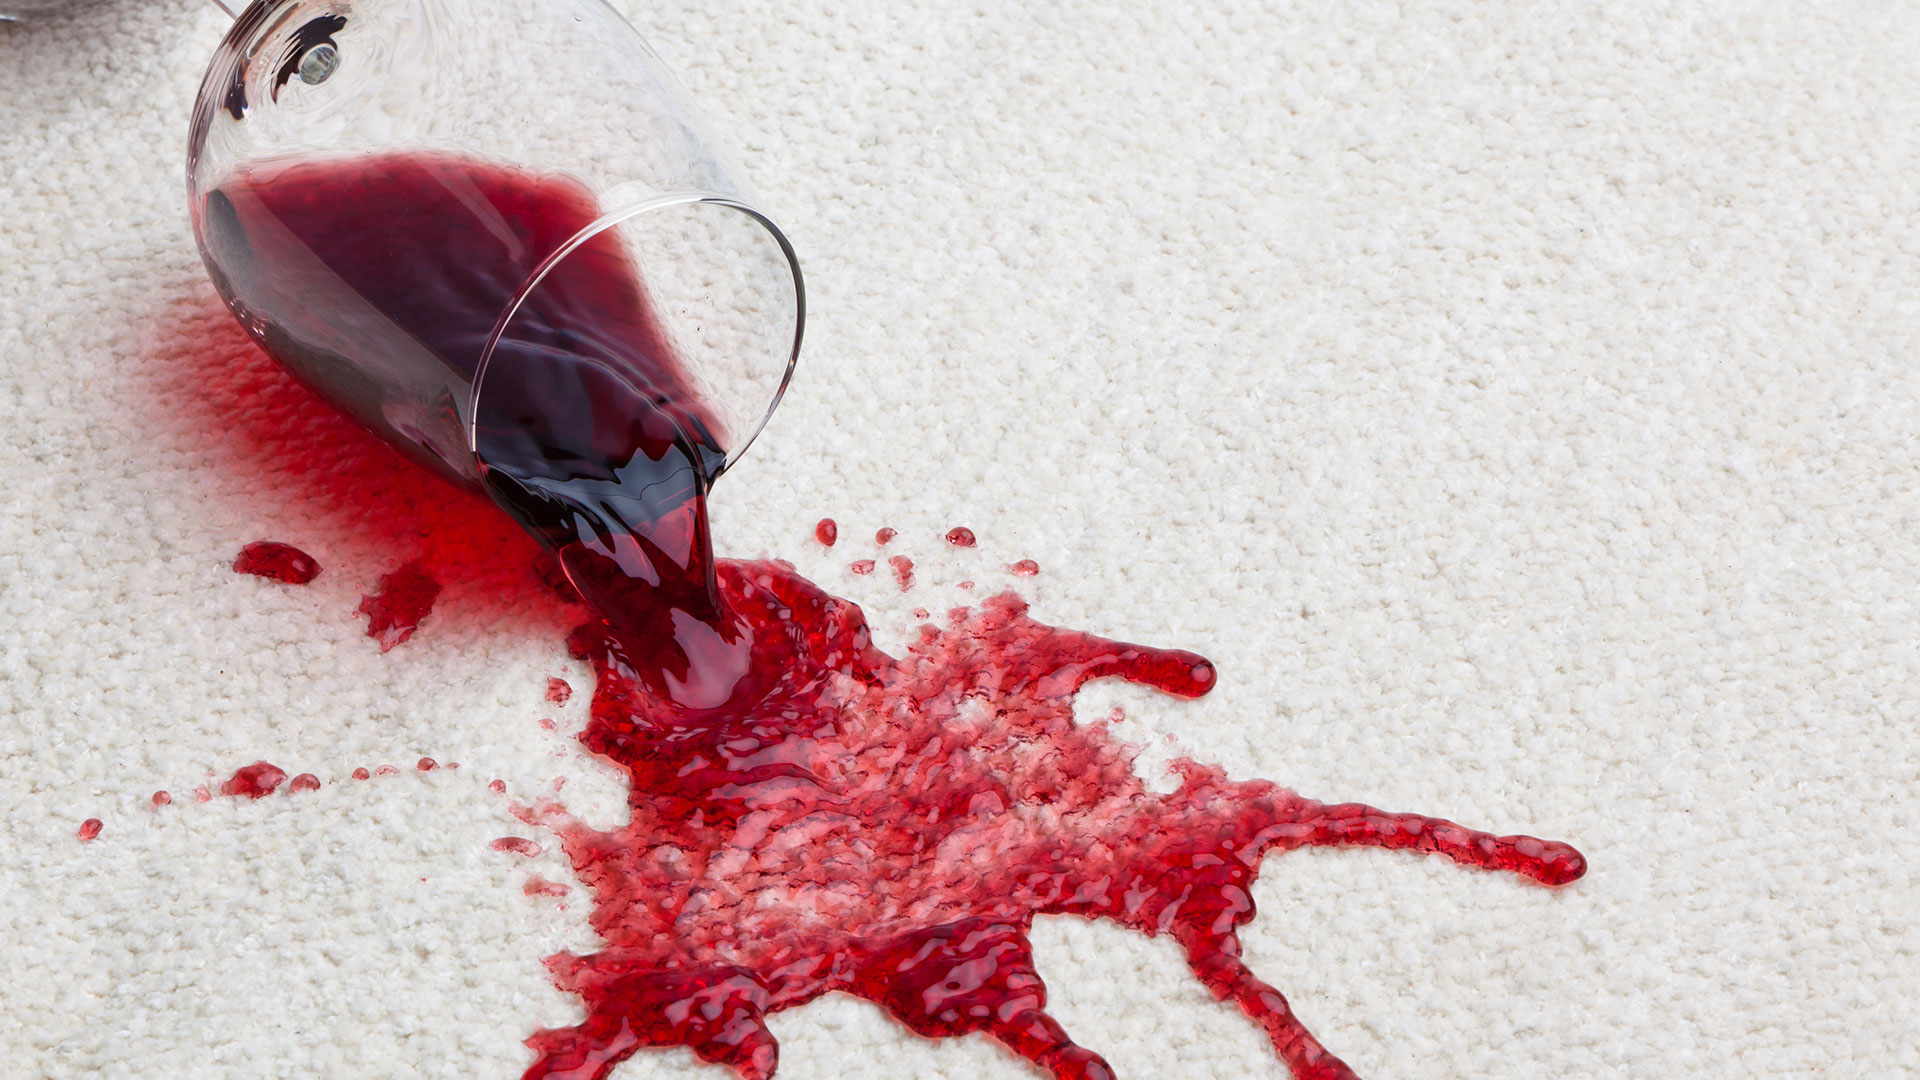 red wine spilled on light carpet